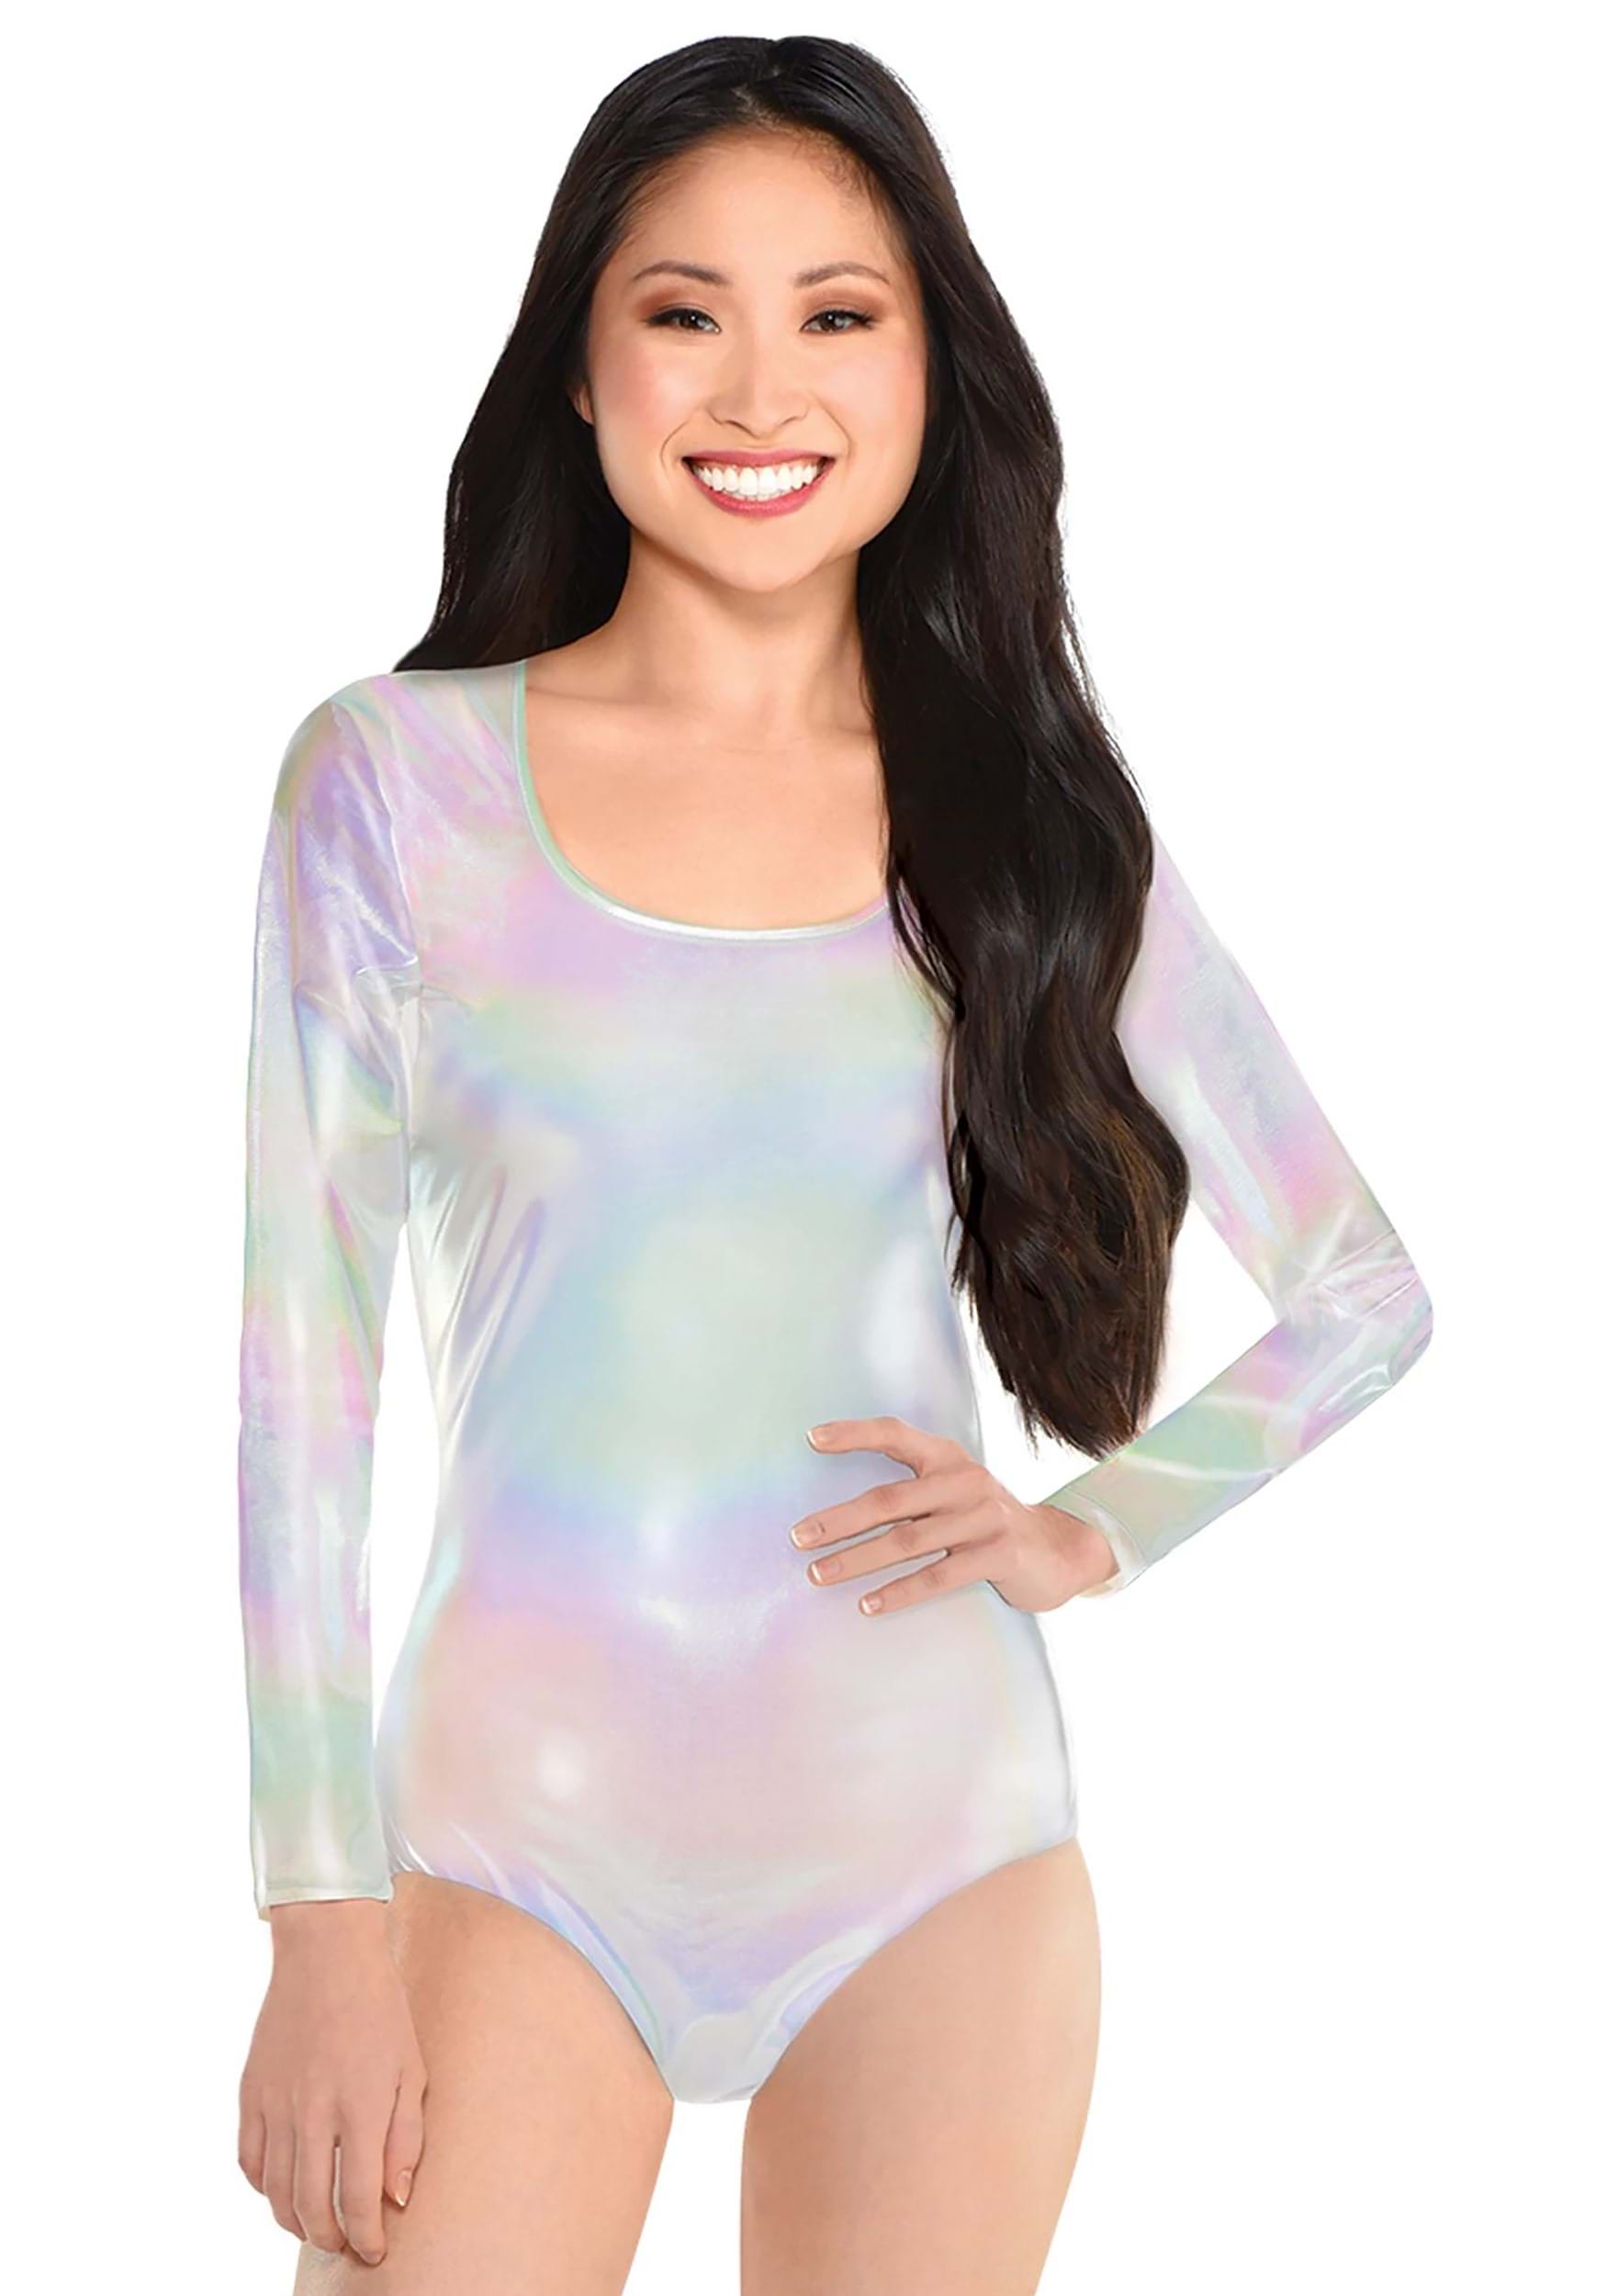 https://images.halloweencostumes.com/products/82689/1-1/womens-l-s-iridescent-bodysuit.jpg